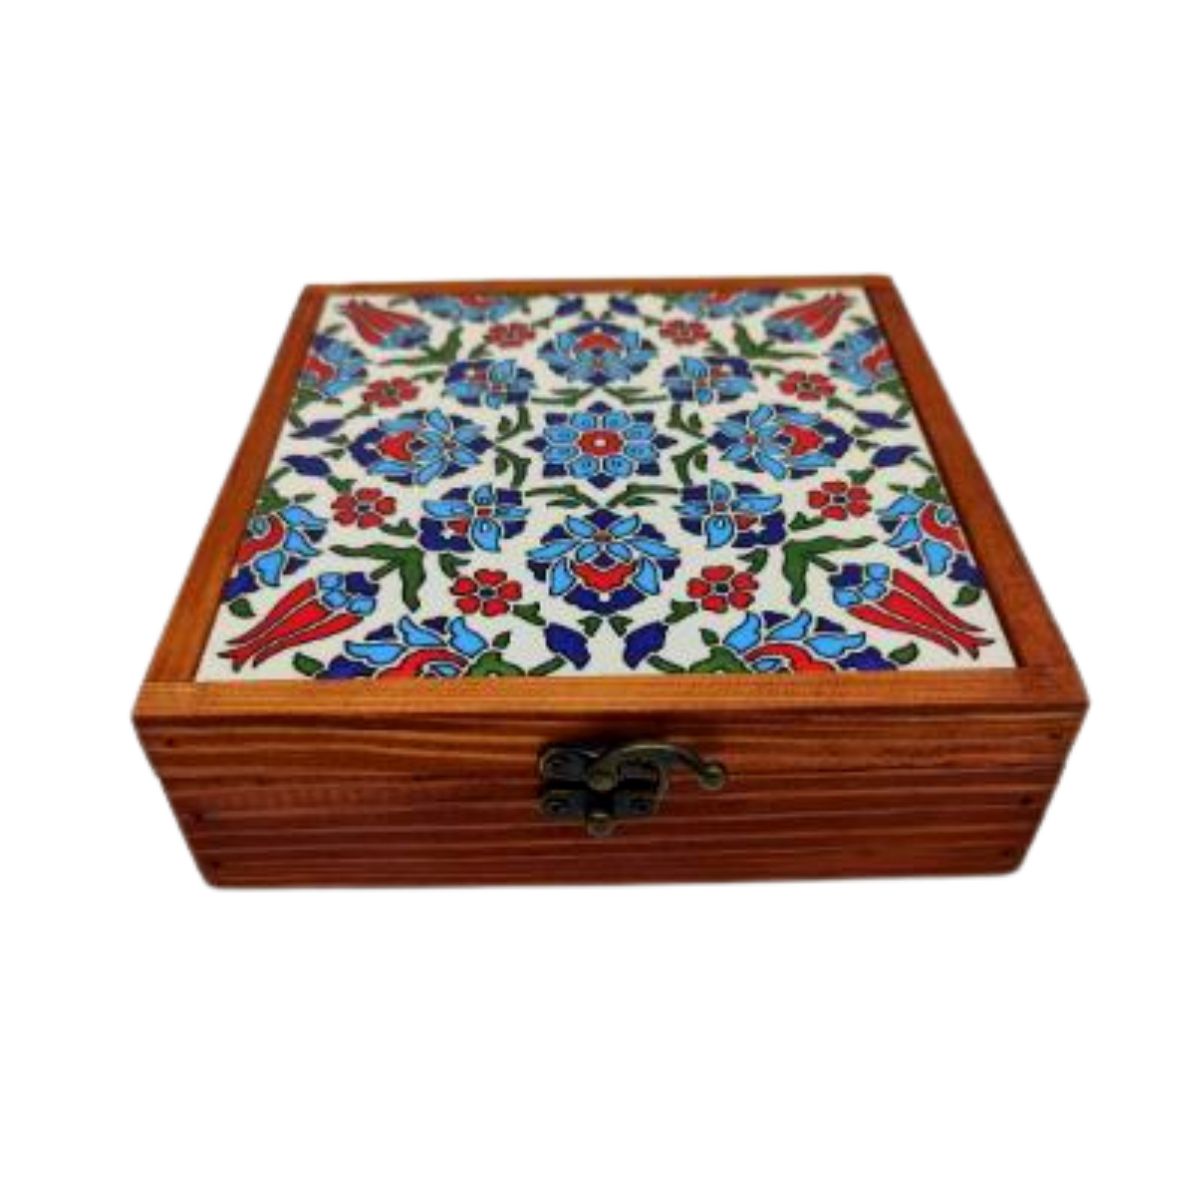 Unique Wood and Ceramic Accessory Box